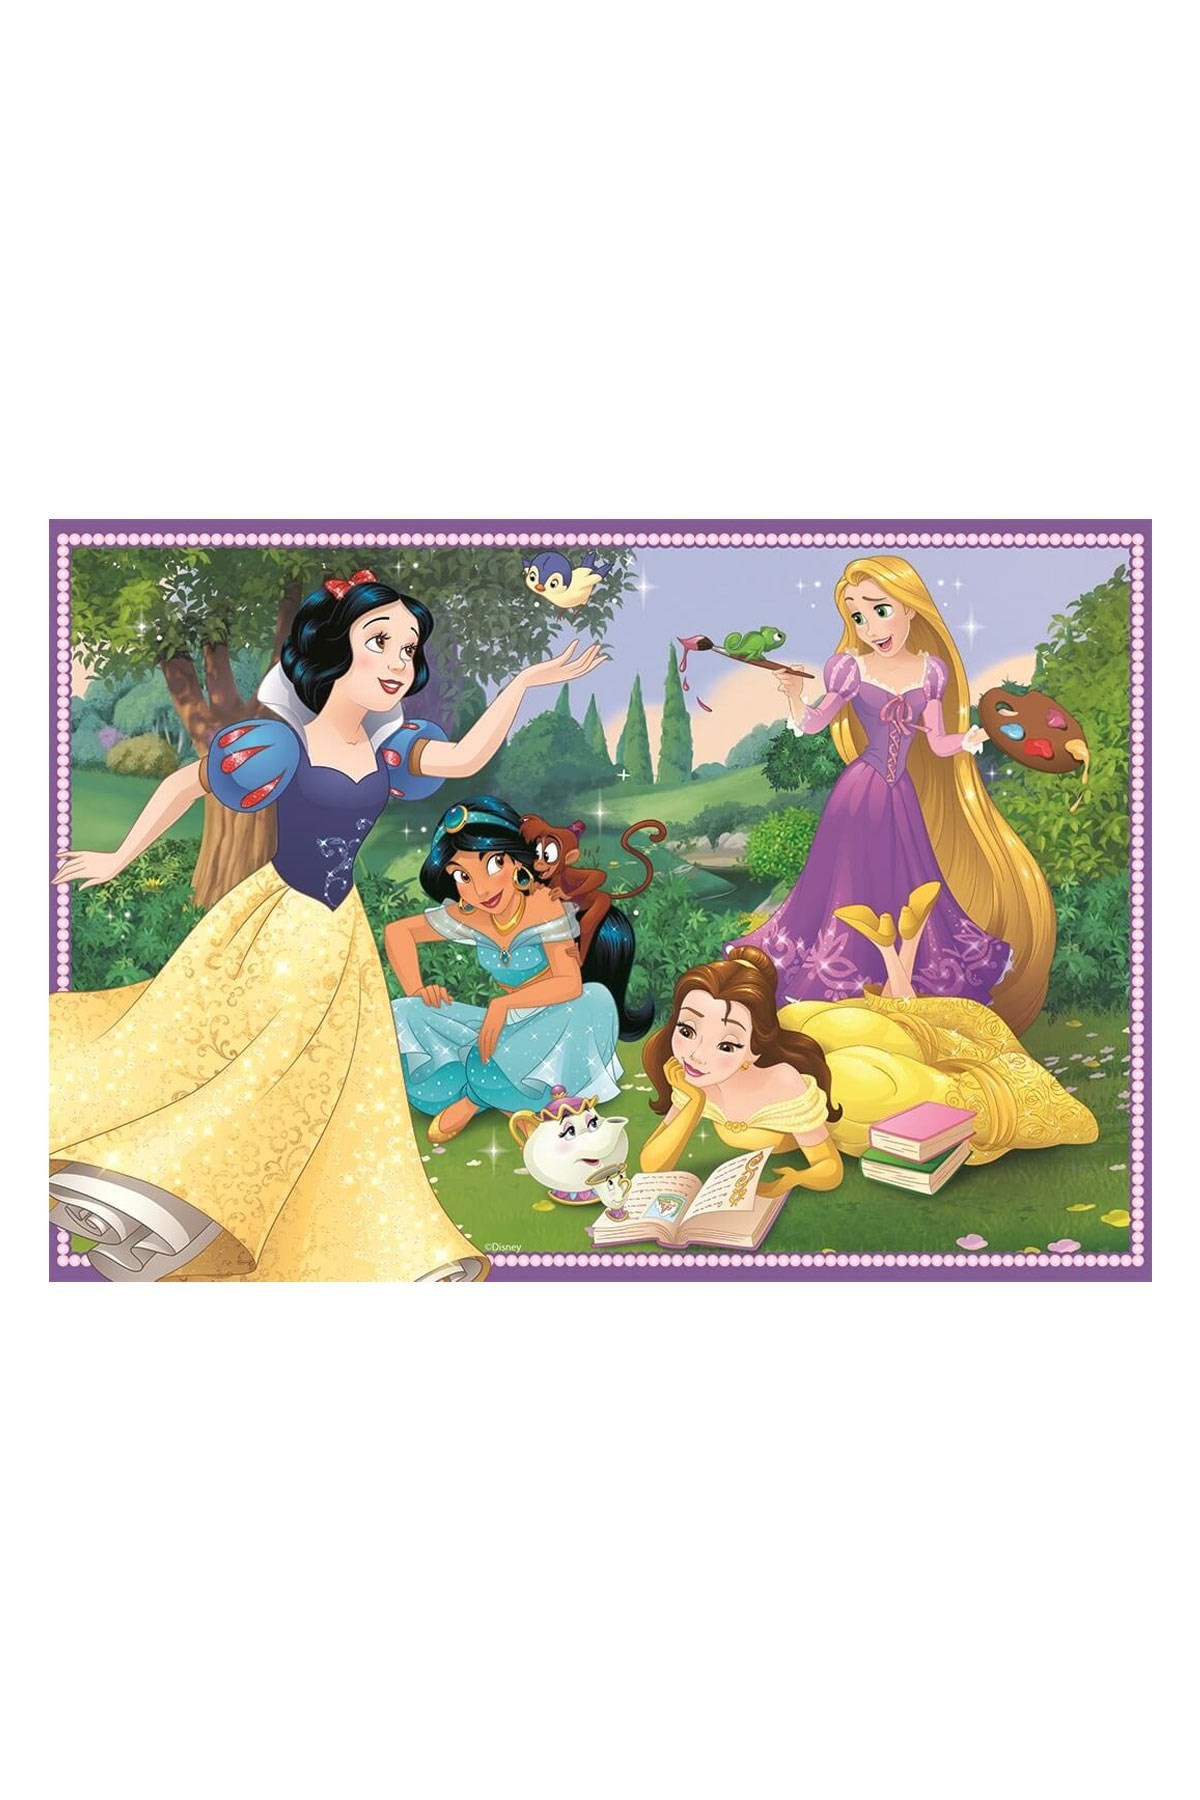 Ravensburger 2x12 Parçalı Puzzle Walt Disney Princess - 076208